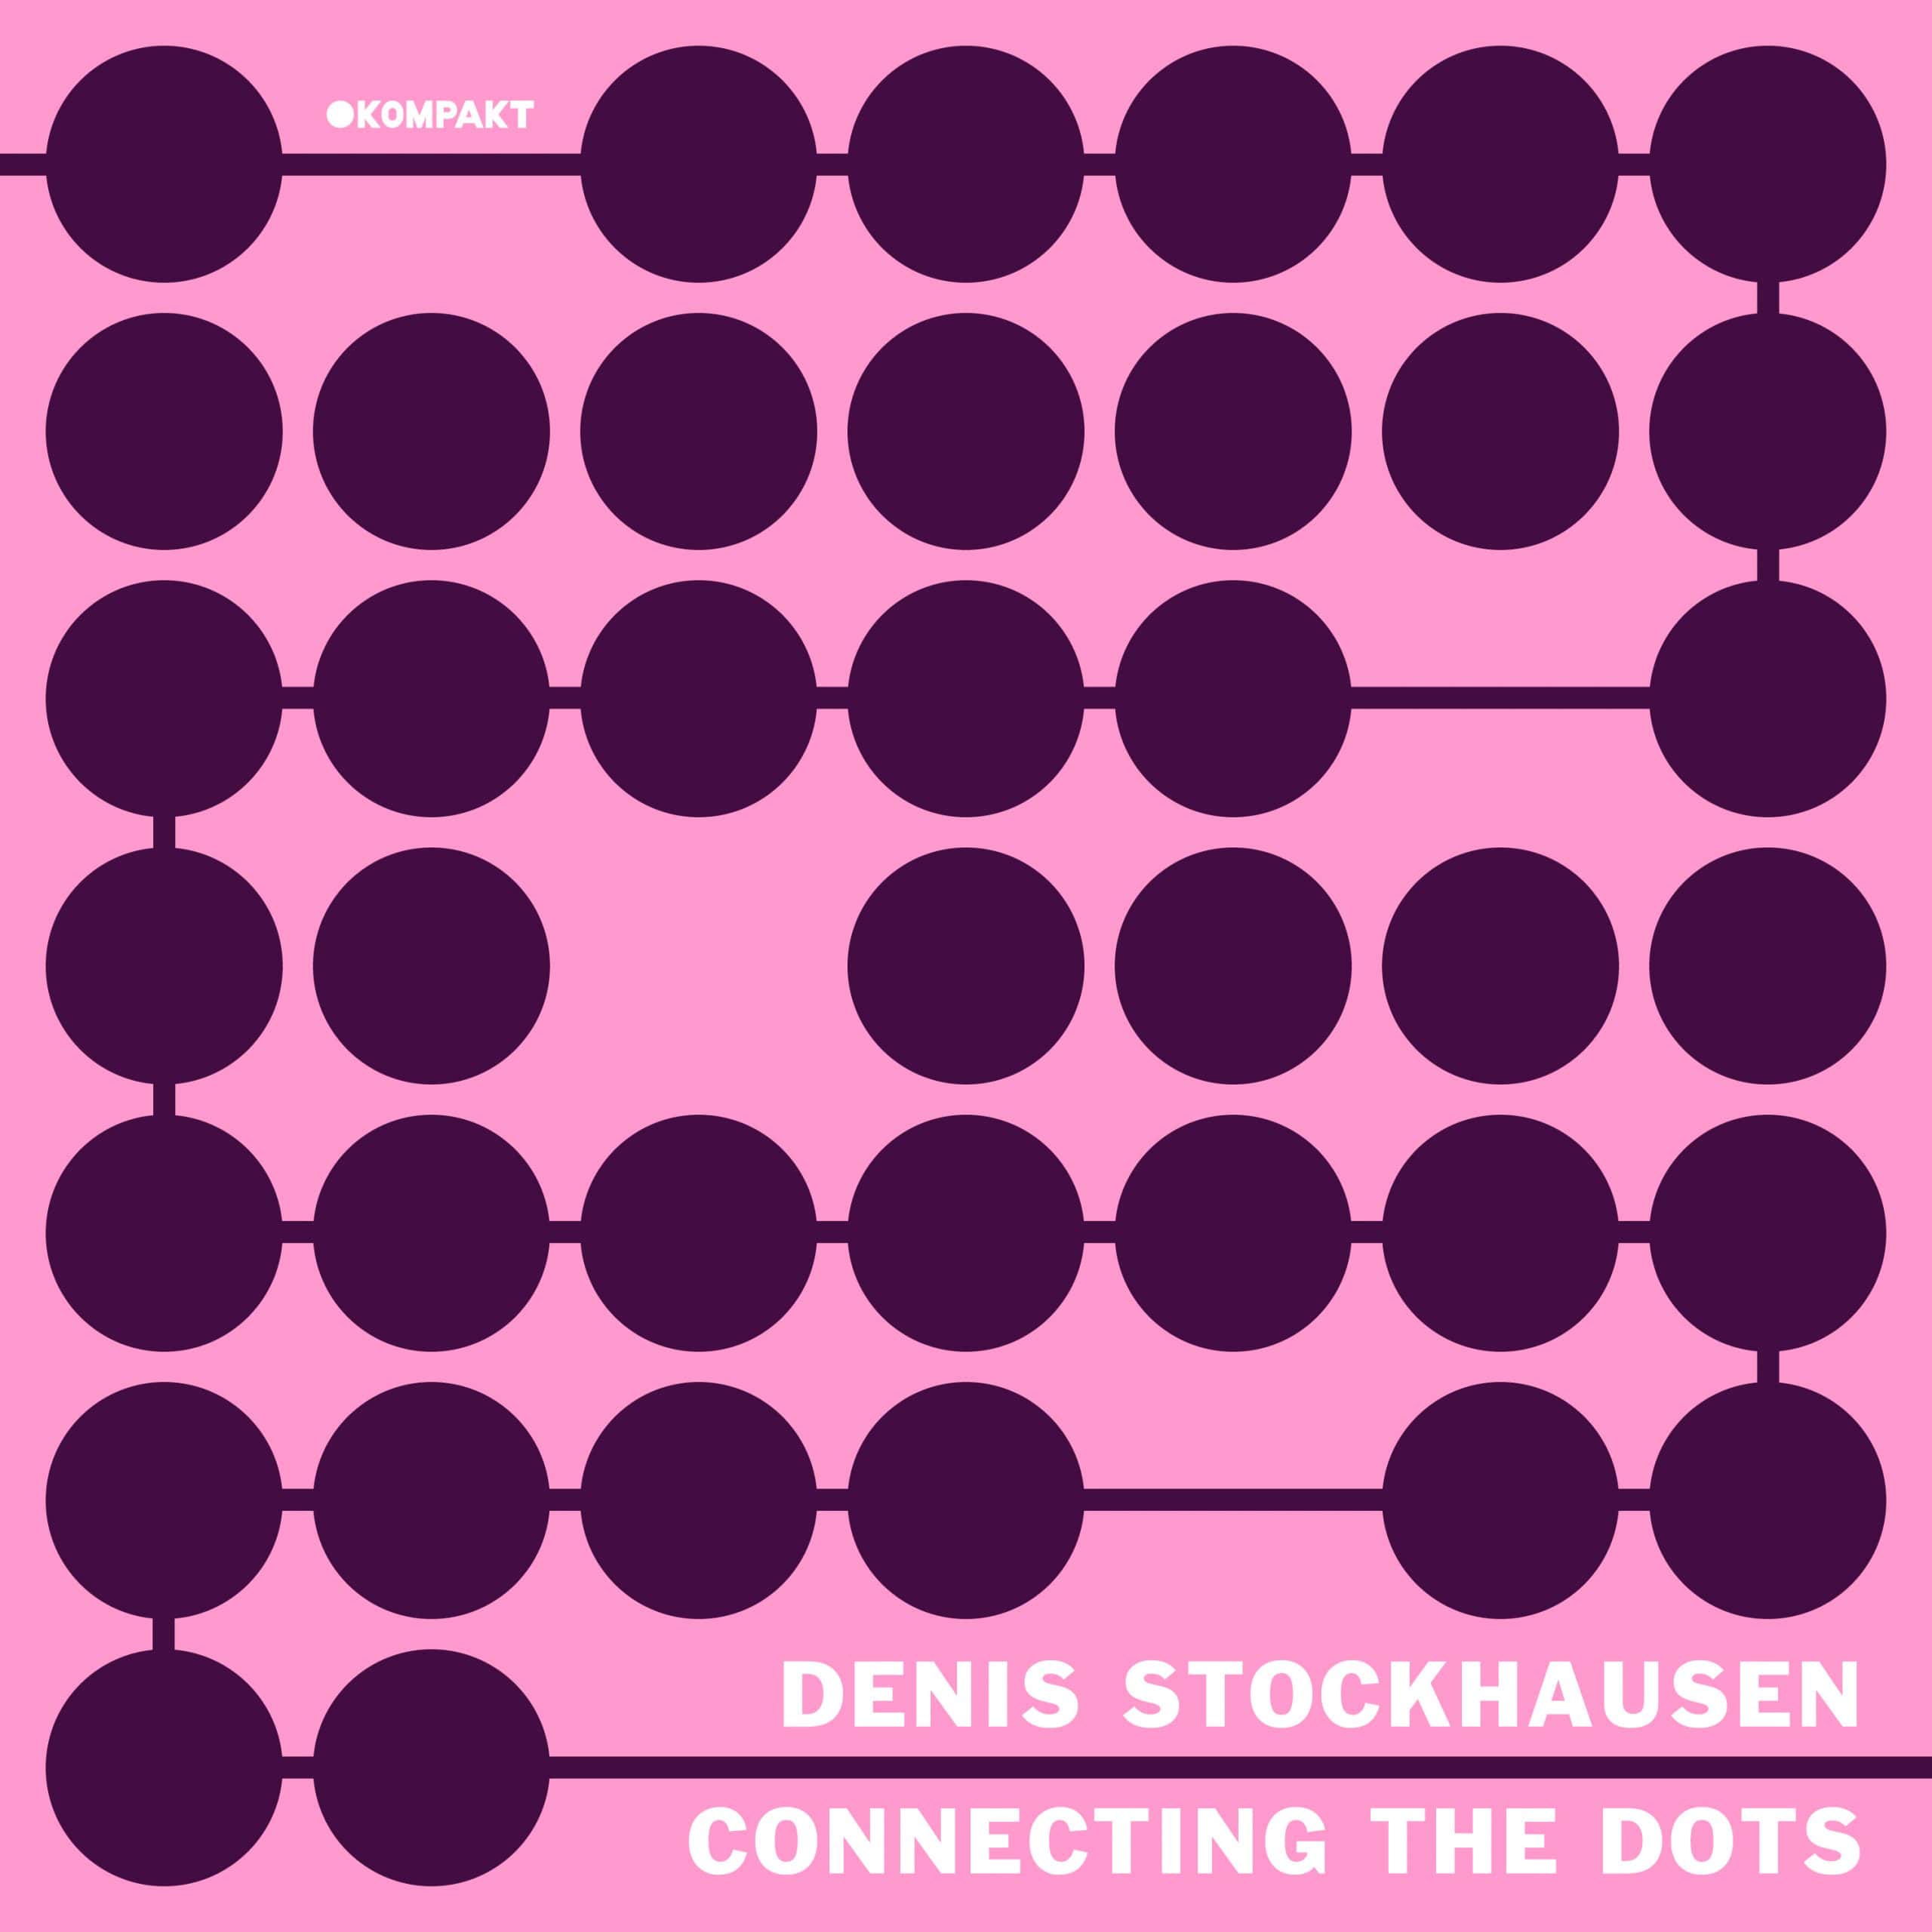 image cover: Denis Stockhausen - Connecting The Dots / KompaktCTD006D